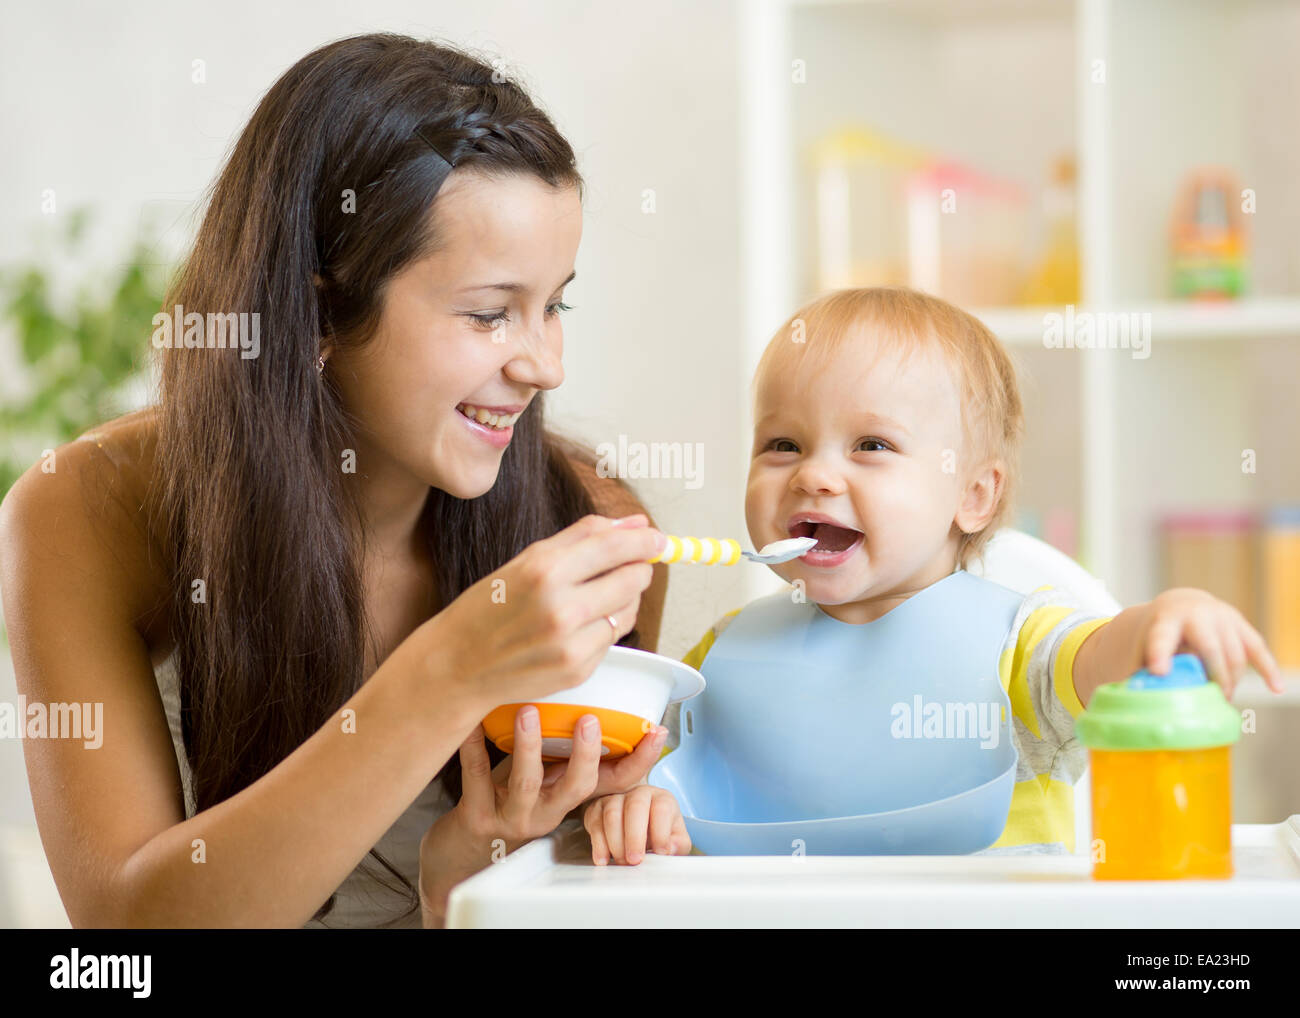 https://c8.alamy.com/comp/EA23HD/happy-mother-spoon-feeding-her-baby-child-EA23HD.jpg